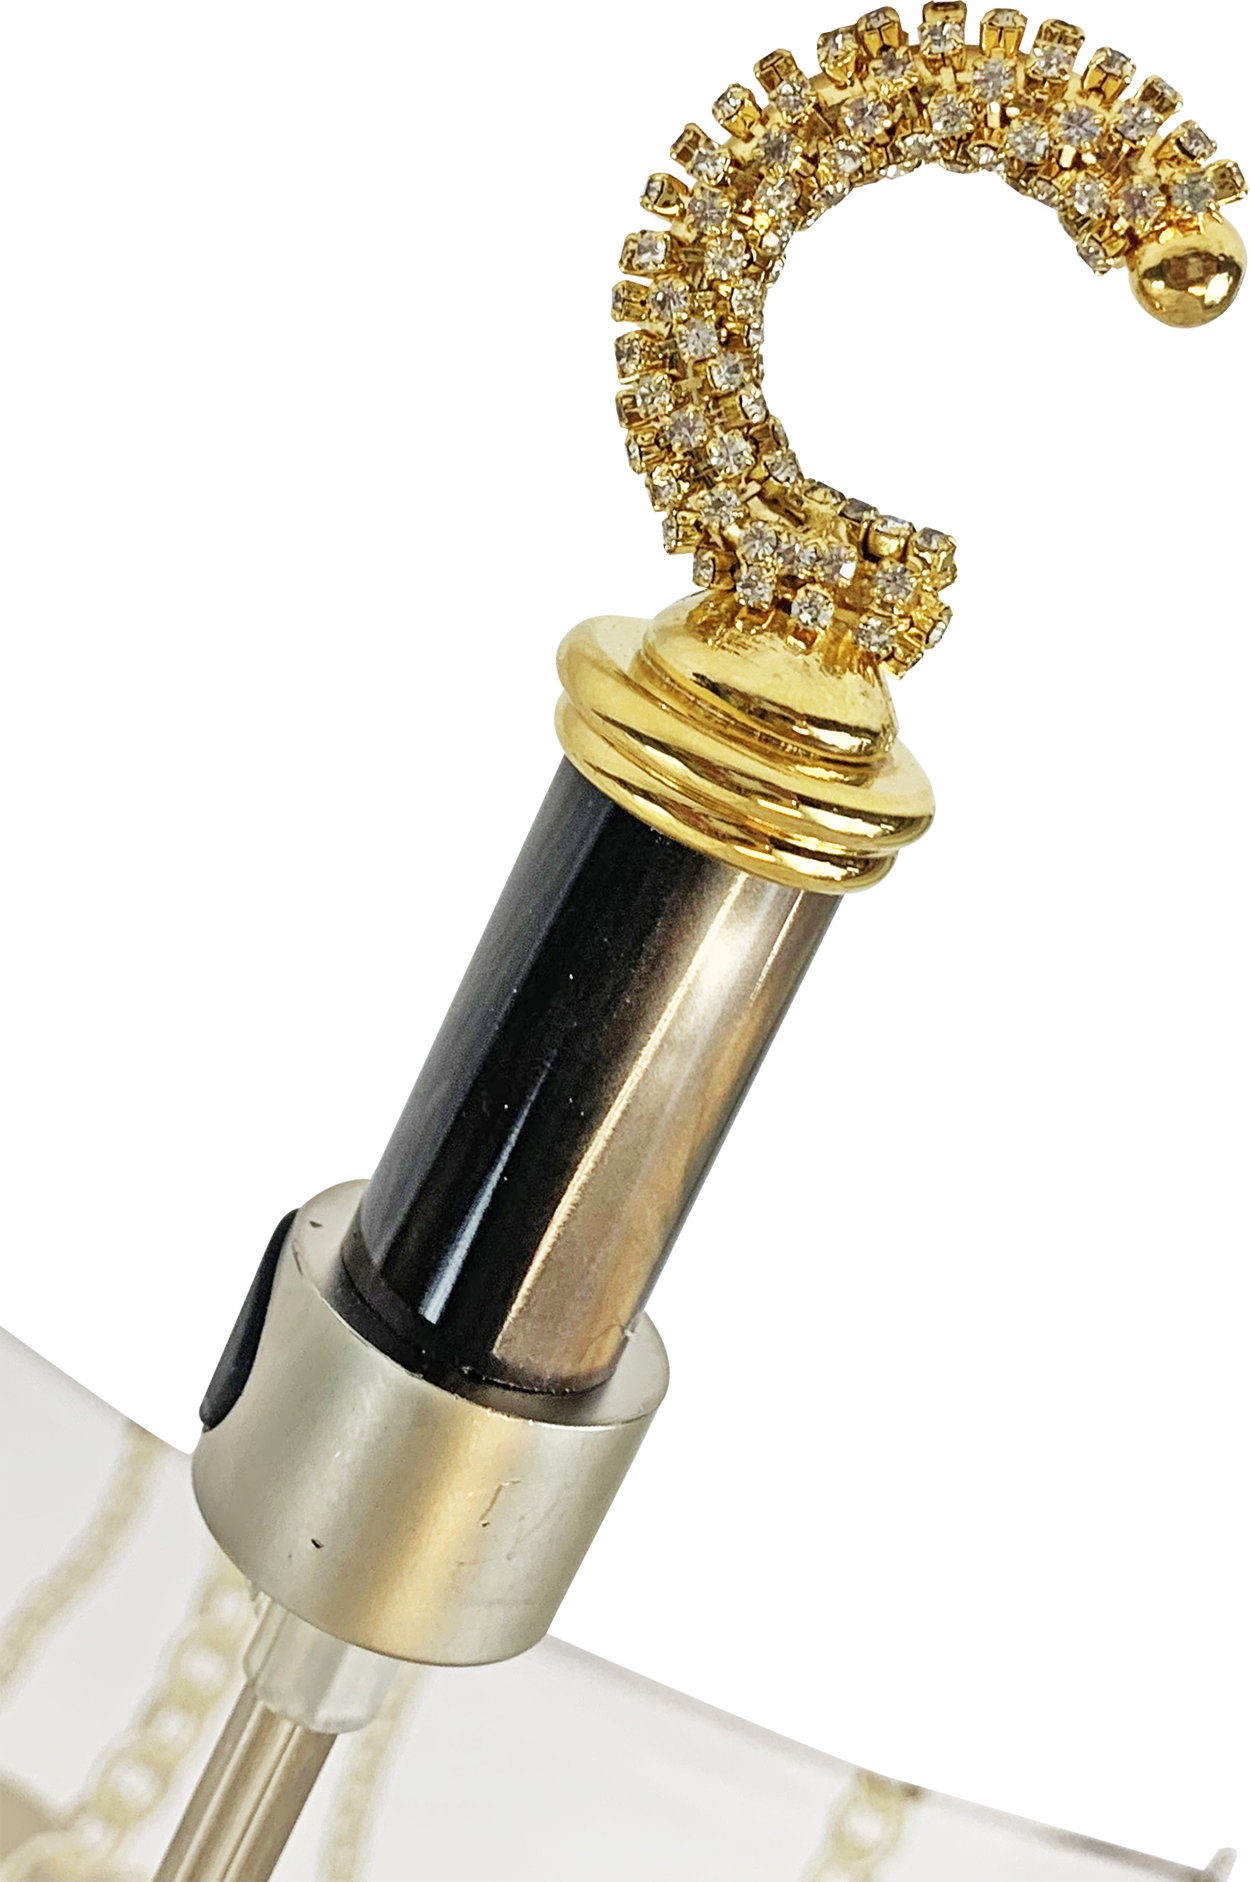 Graceful exclusive ilMarchesato design with crystals handle